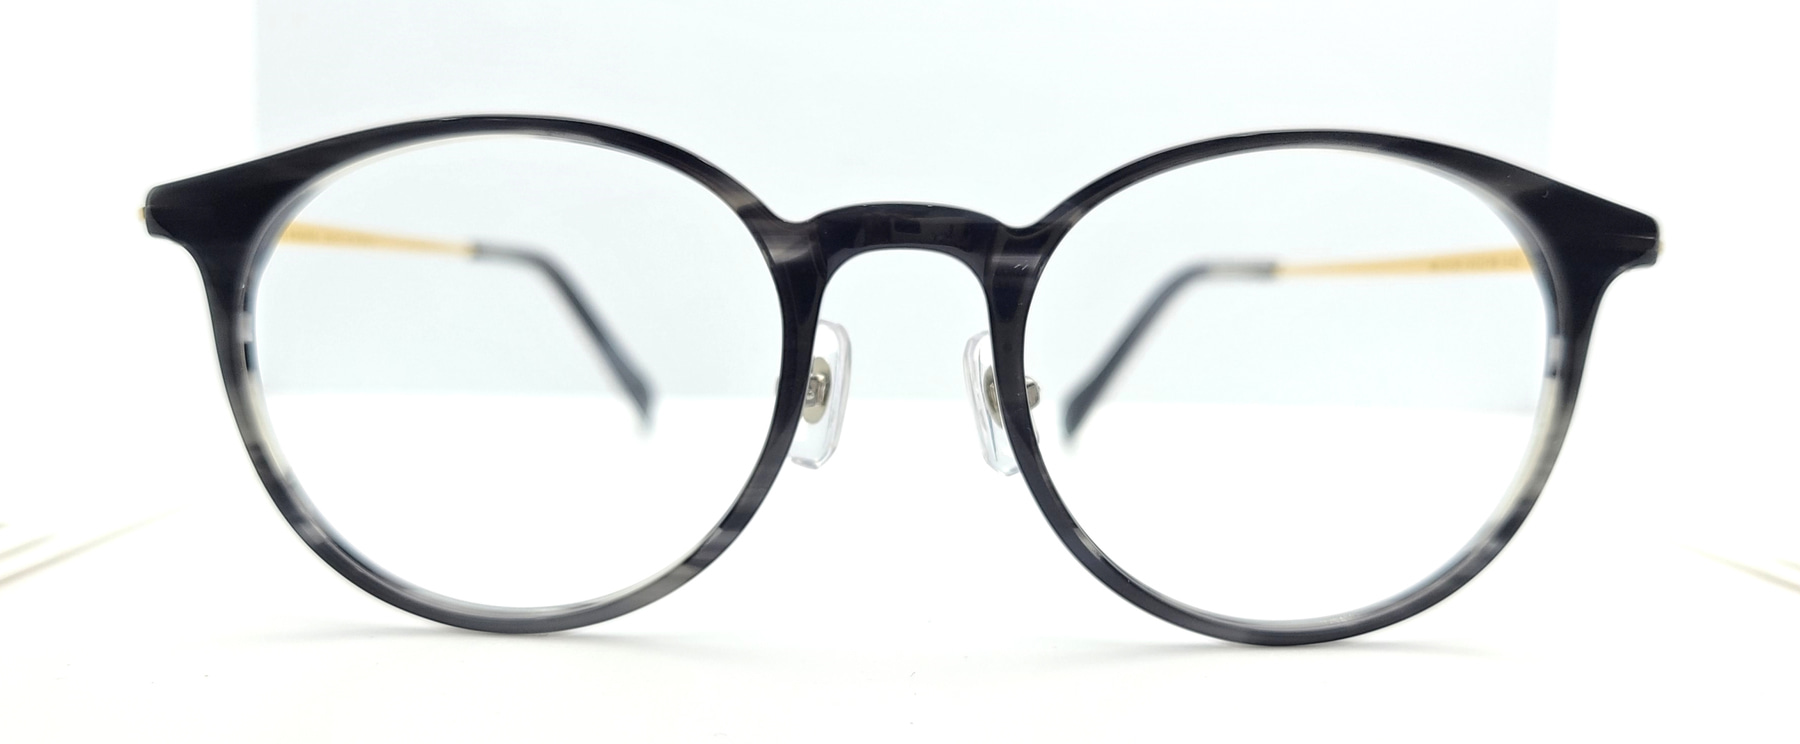 MINIHOUSE M-1425, Korean glasses, sunglasses, eyeglasses, glasses